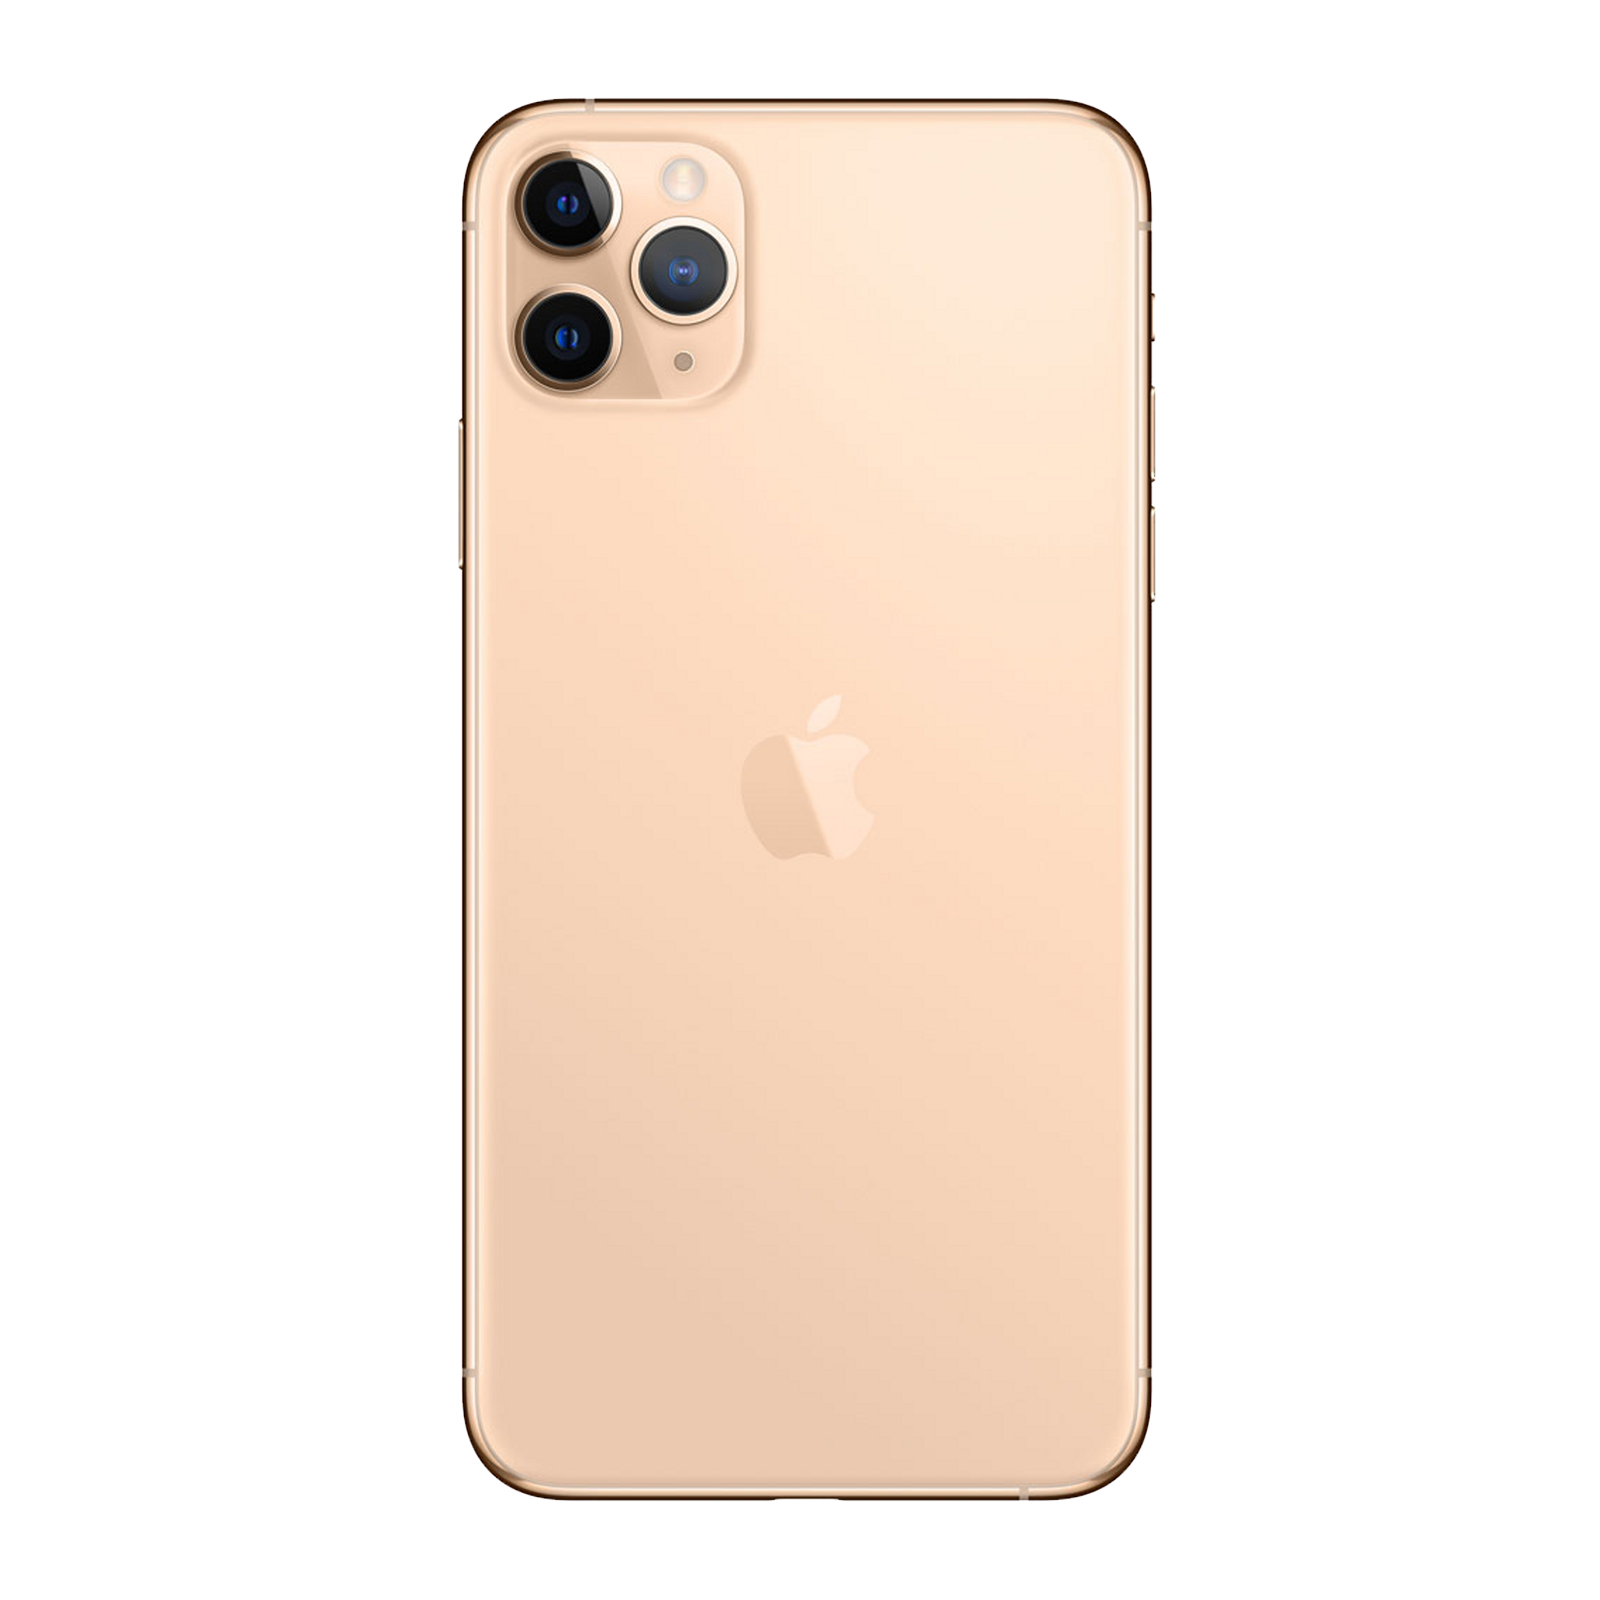 Apple iPhone 11 Pro 64GB Gold Pristine - Unlocked